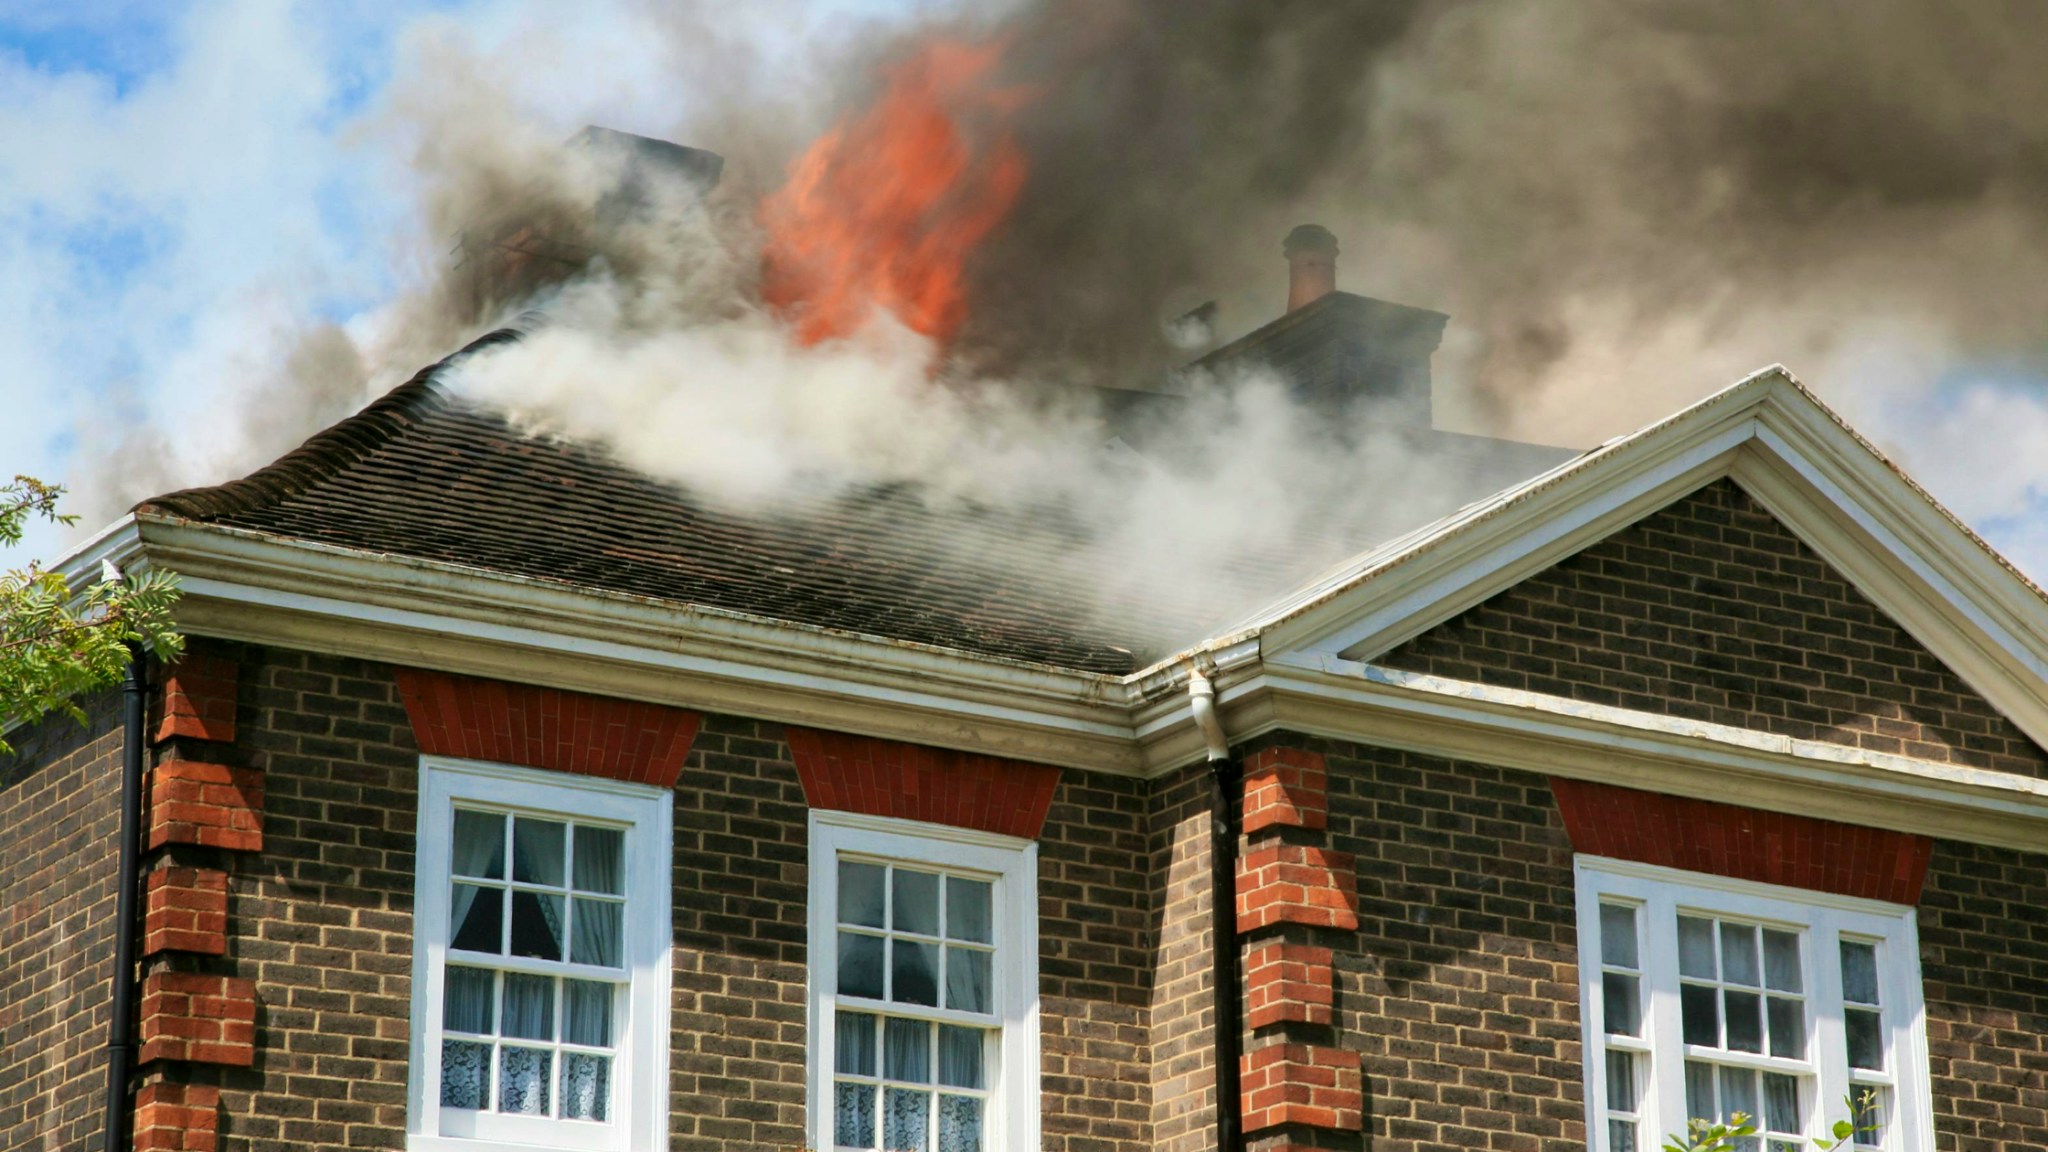 Home fire in birmingham, al